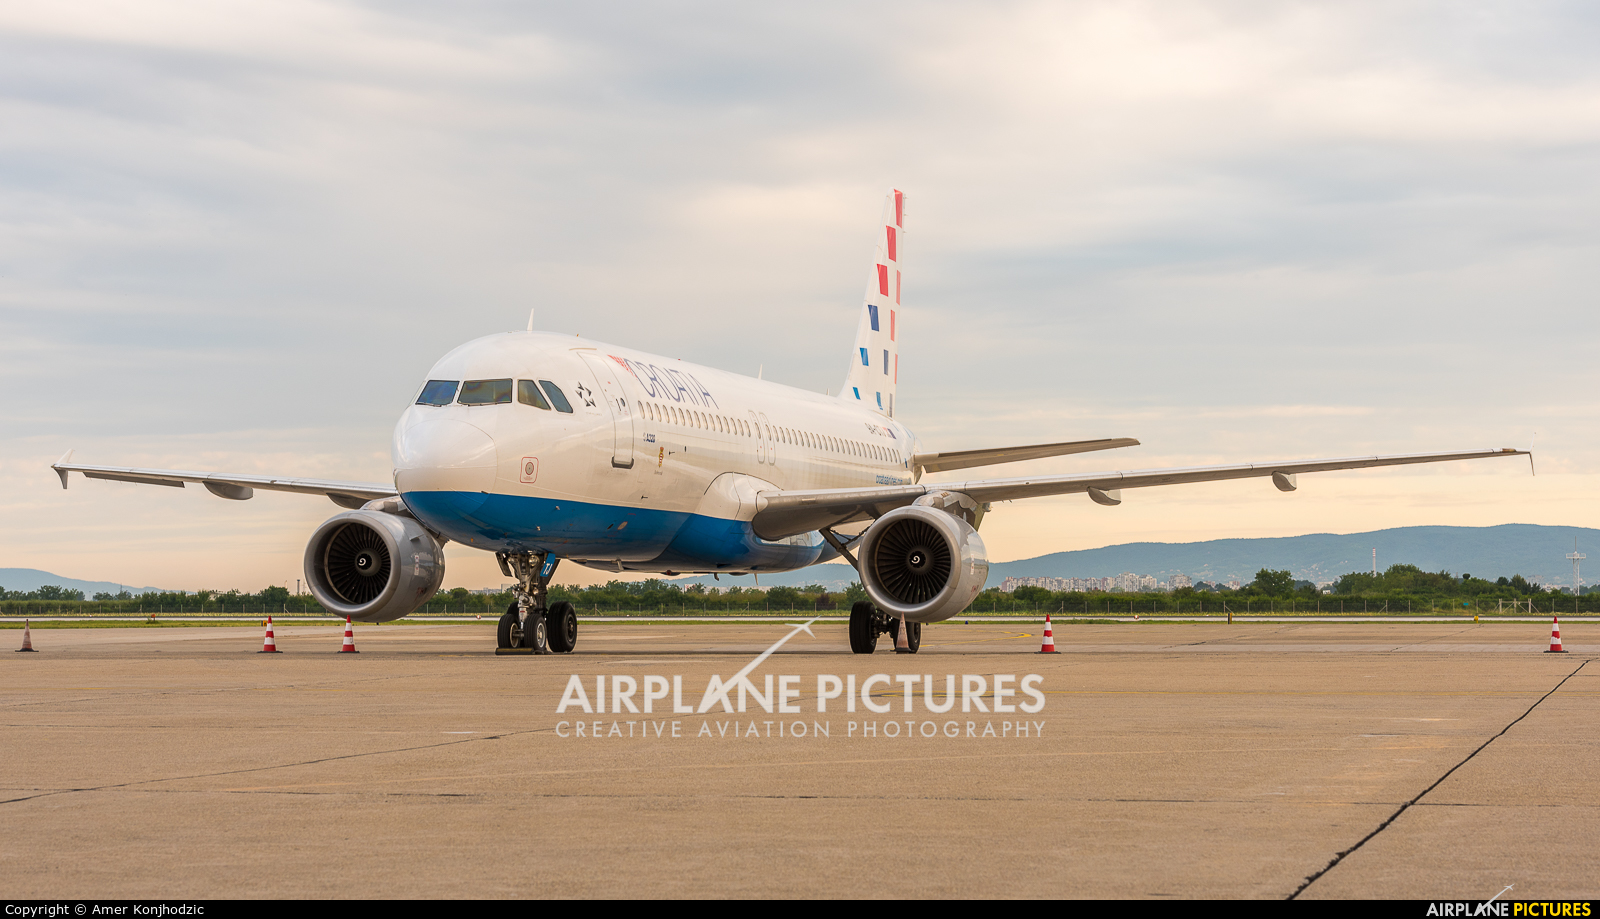 Croatia Airlines 9A-CTJ aircraft at Zagreb